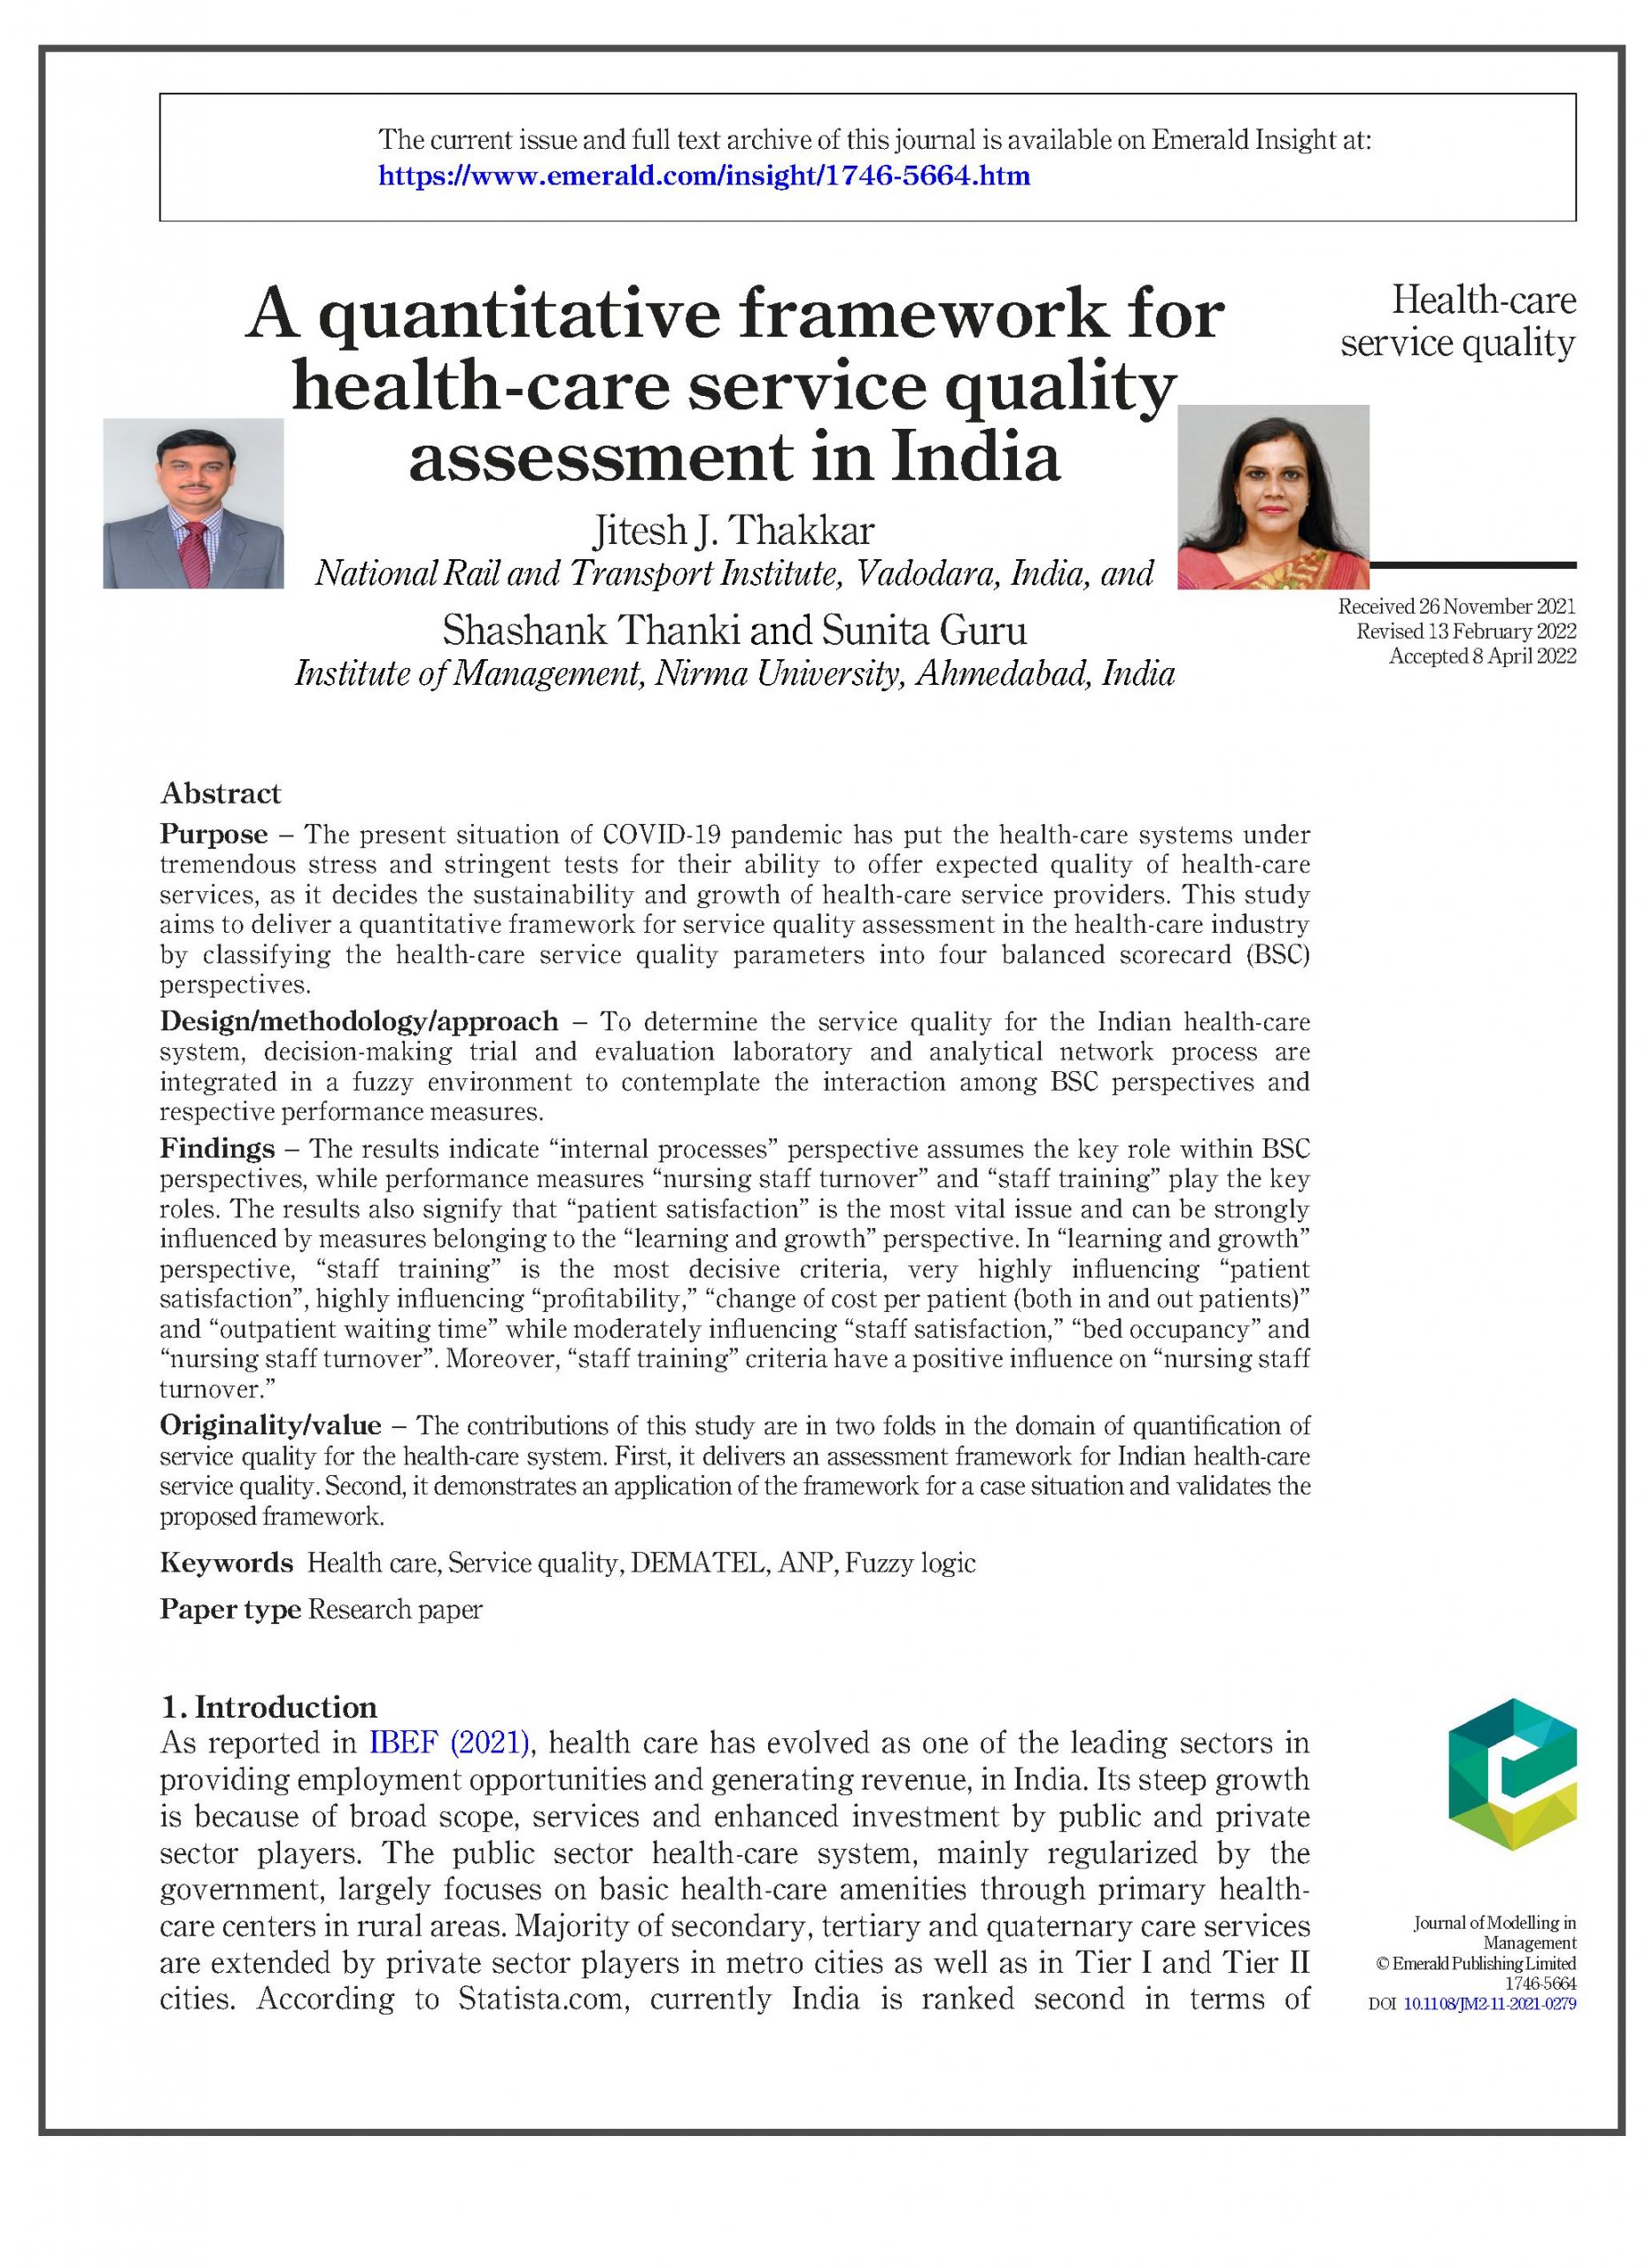 A quantitative framework for health? Care service quality assessment in India